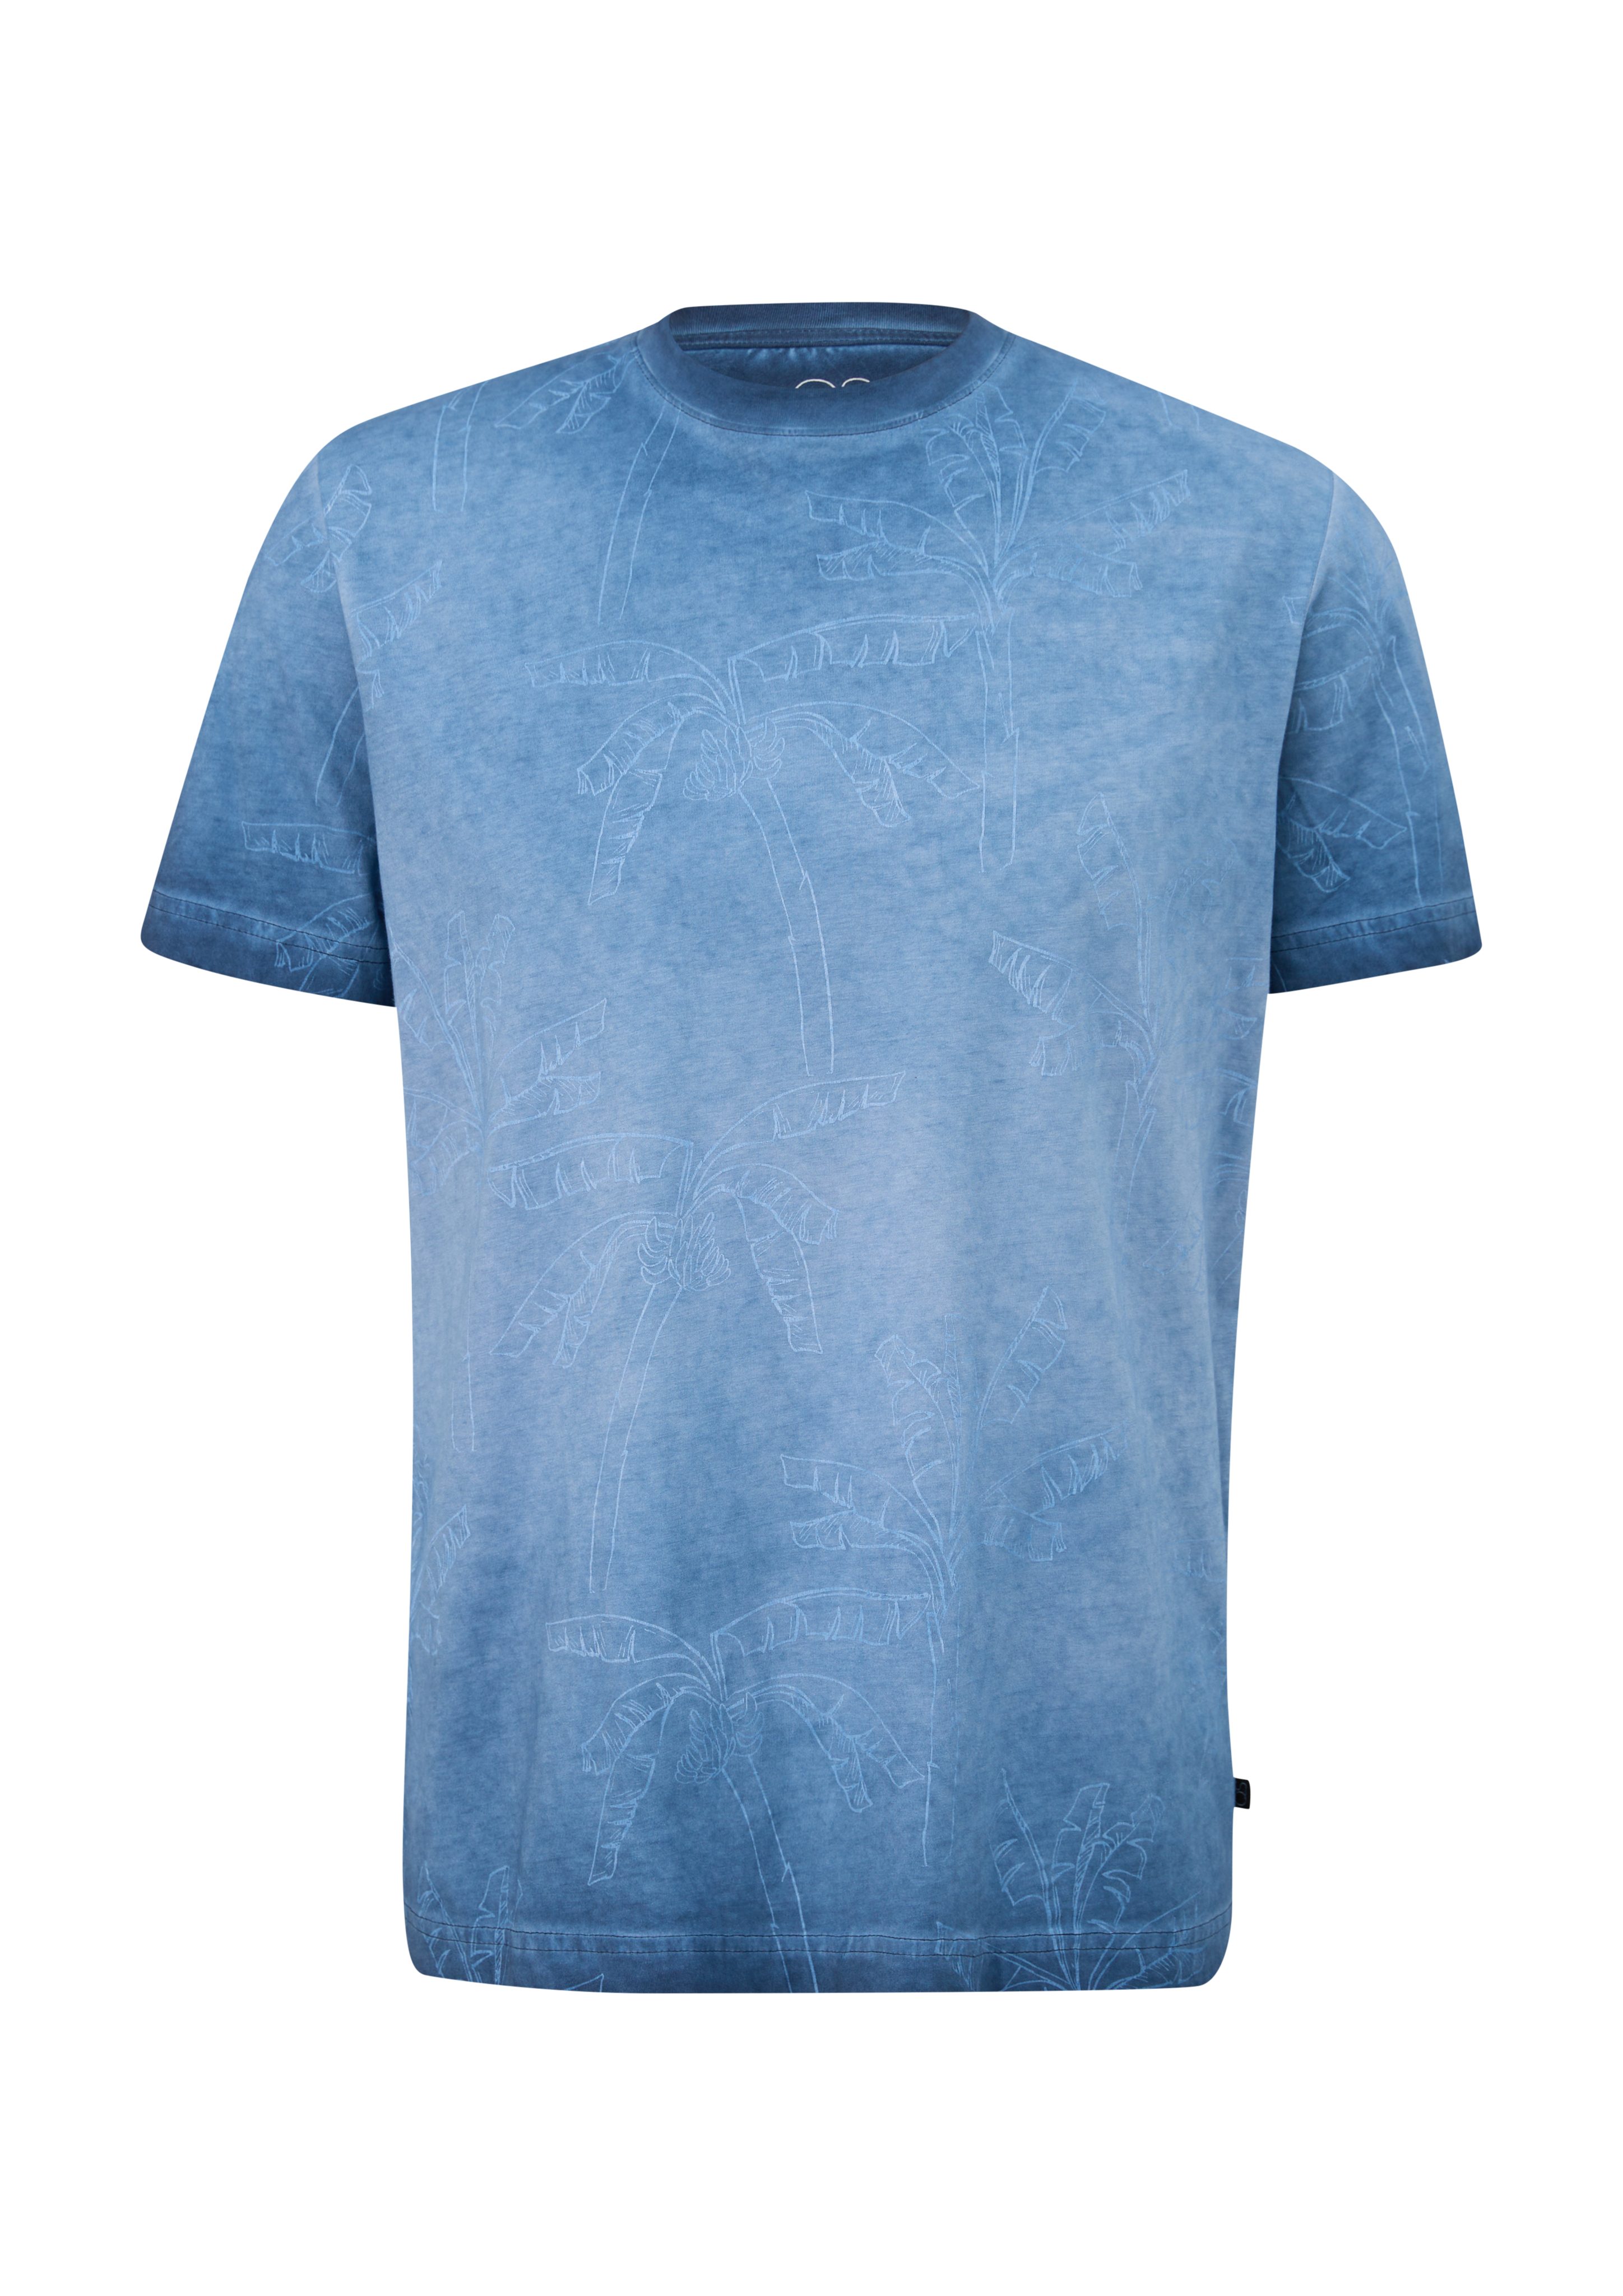 QS tiefblau Baumwolle T-Shirt reiner aus Kurzarmshirt